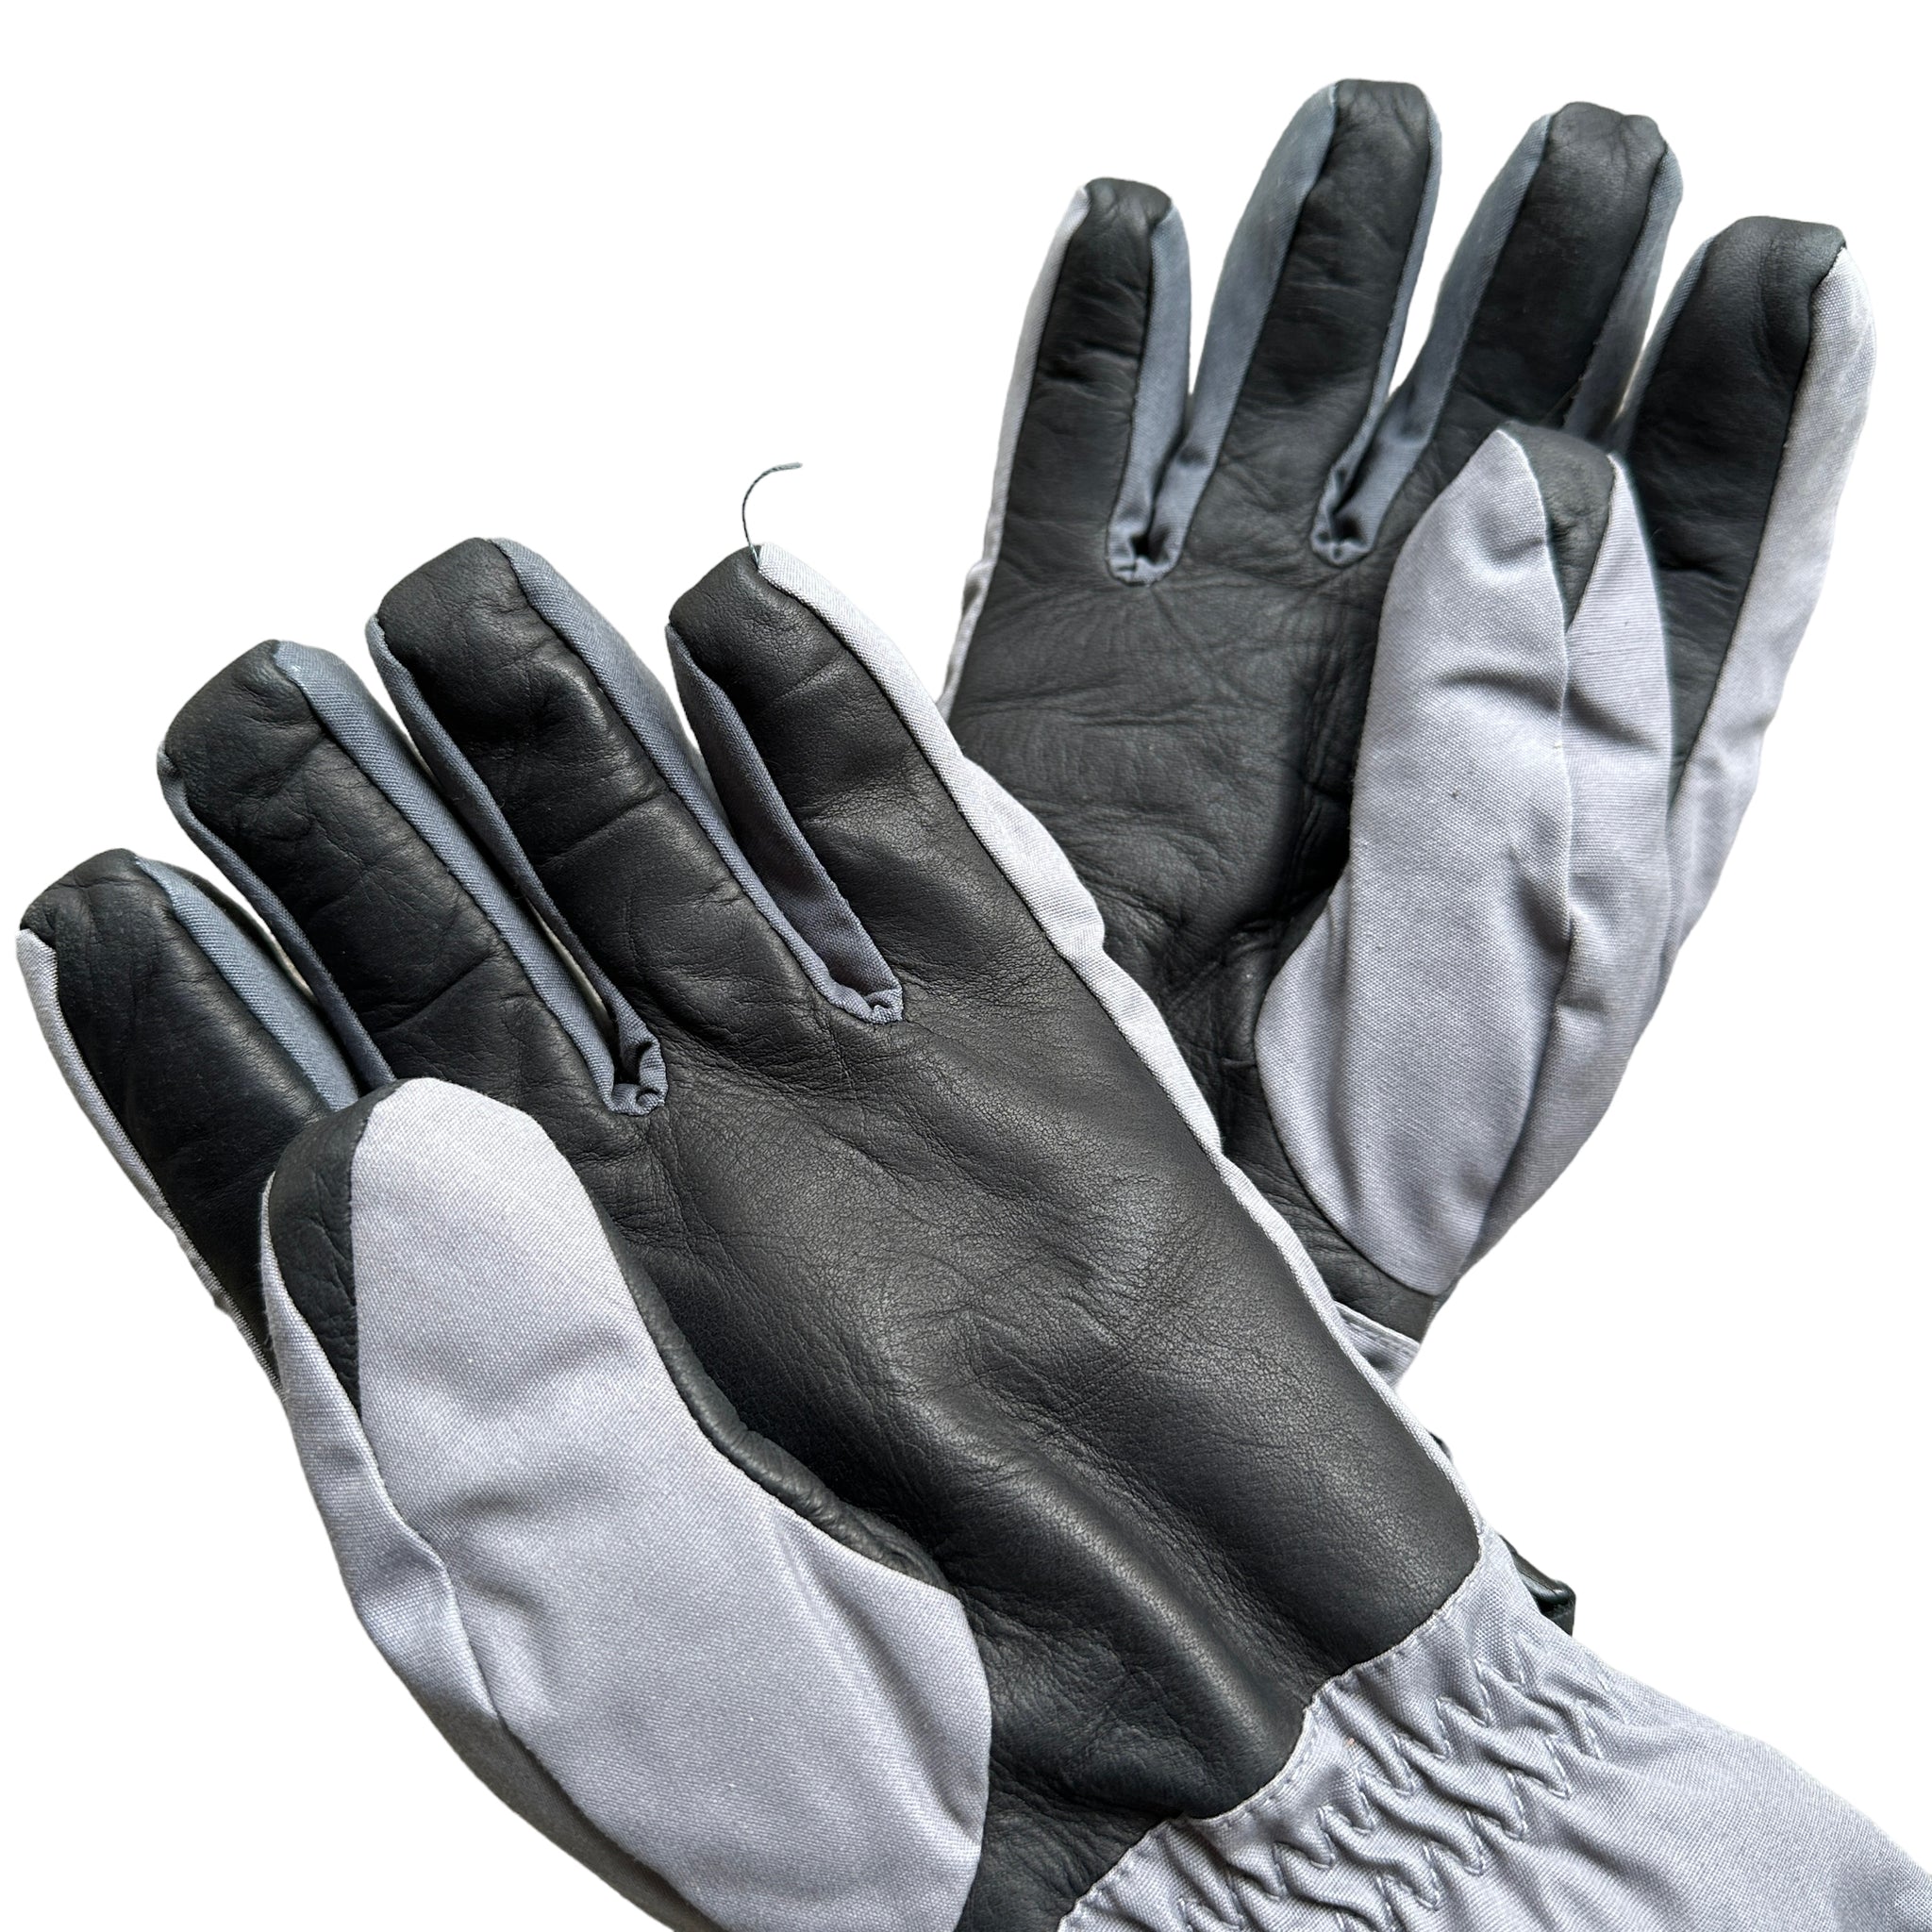 Dakine snowboard gloves 
Small